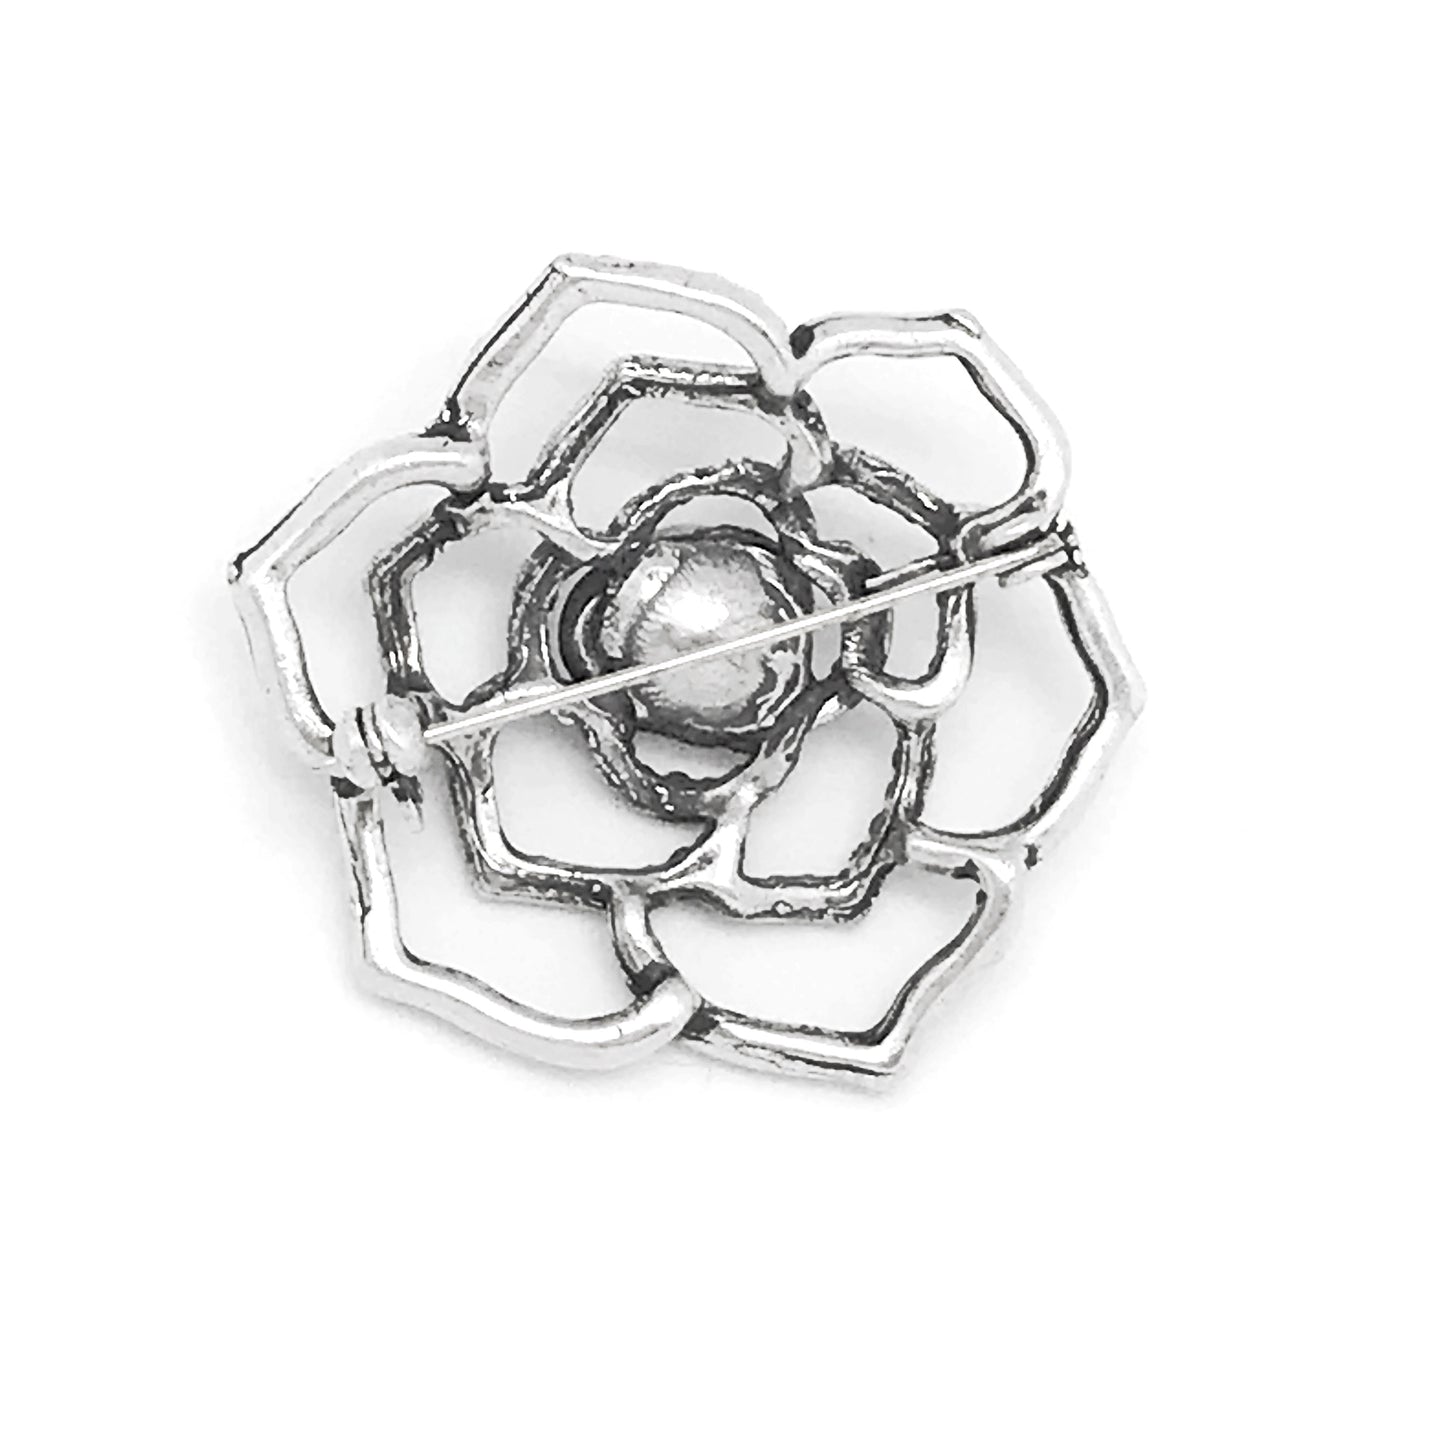 Broche cristal Swarovski plata zamak chapado 4.5cm